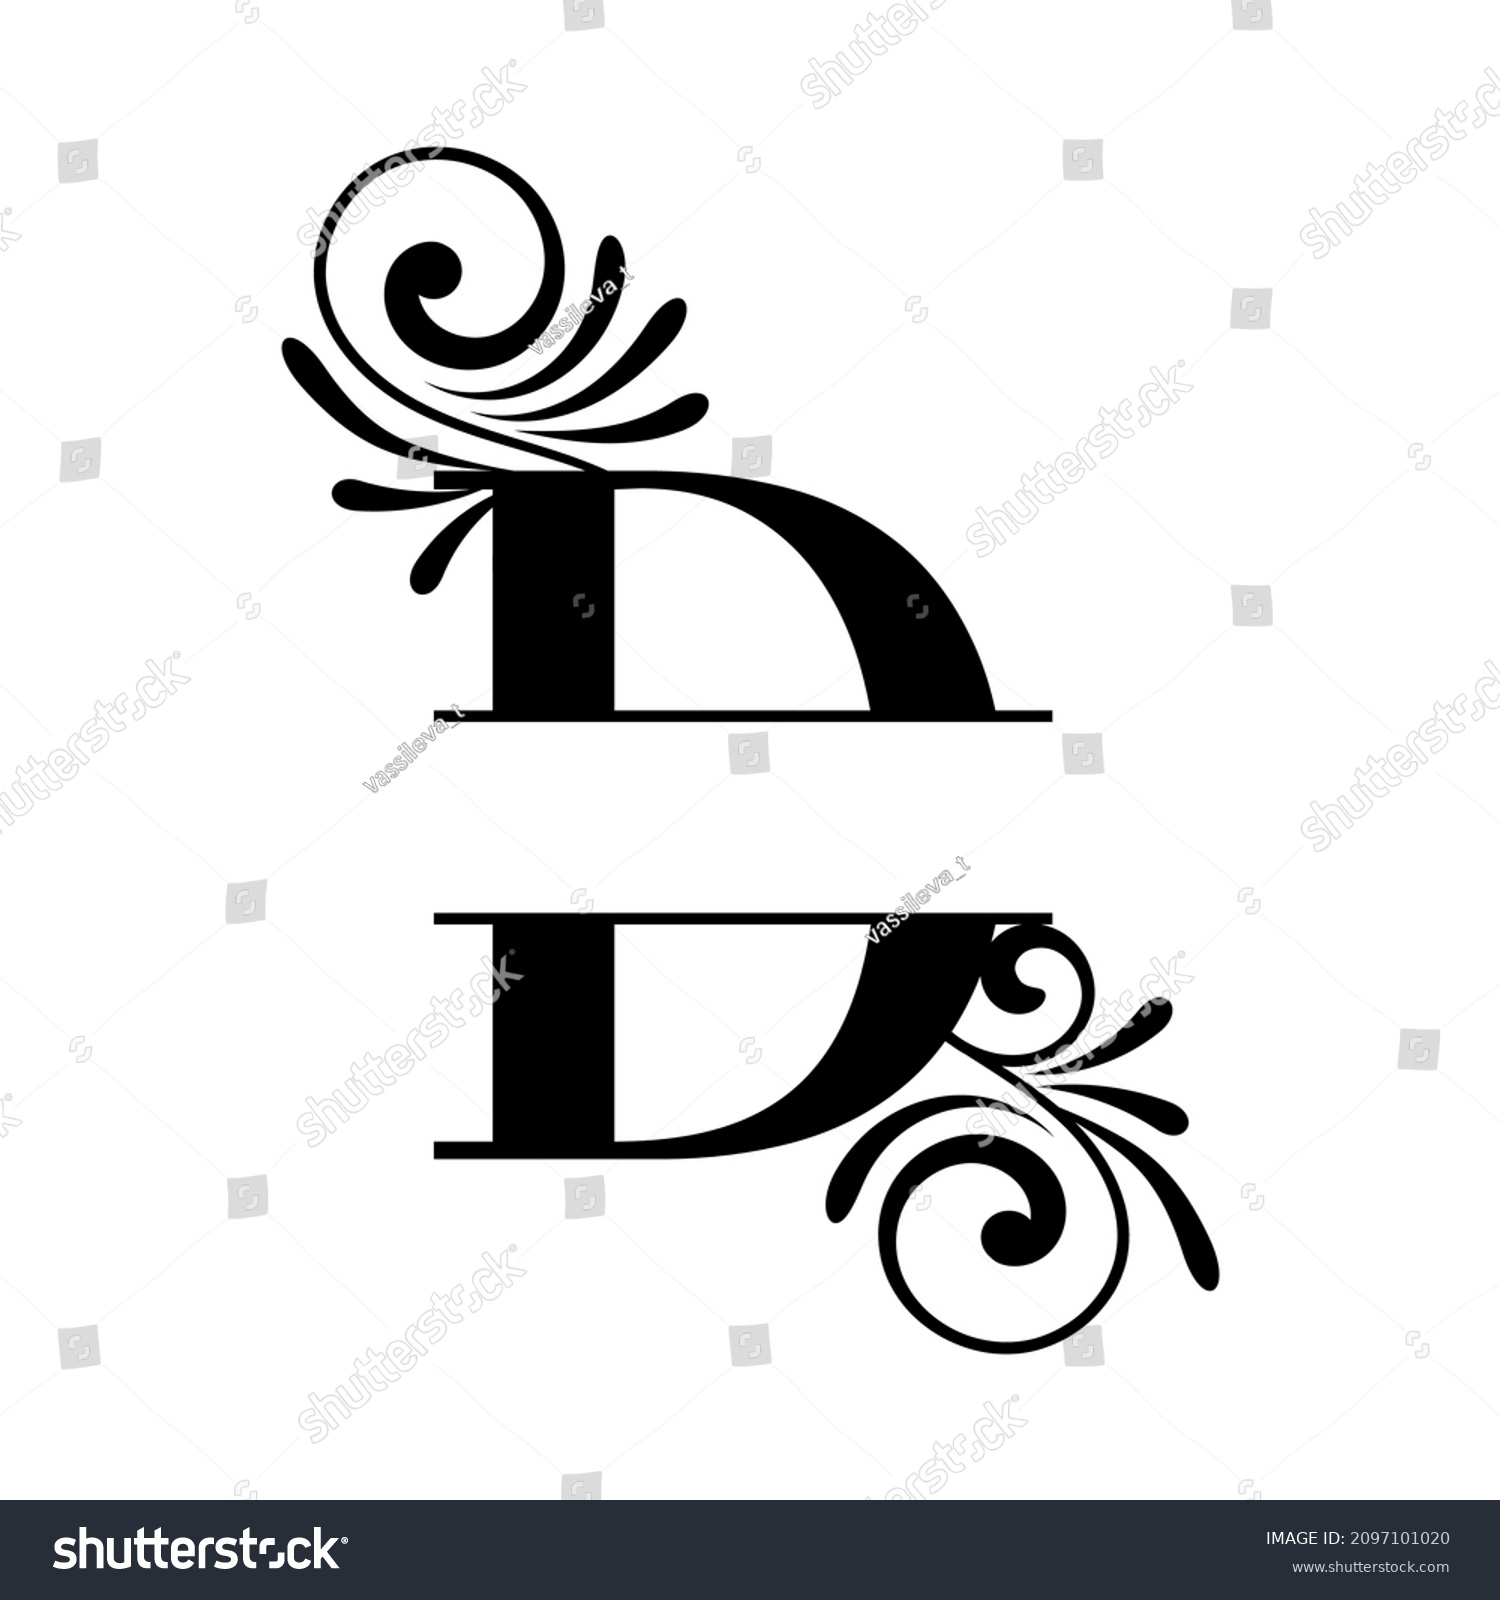 SVG of Letter Monogram. Initial letters of the monogram D svg